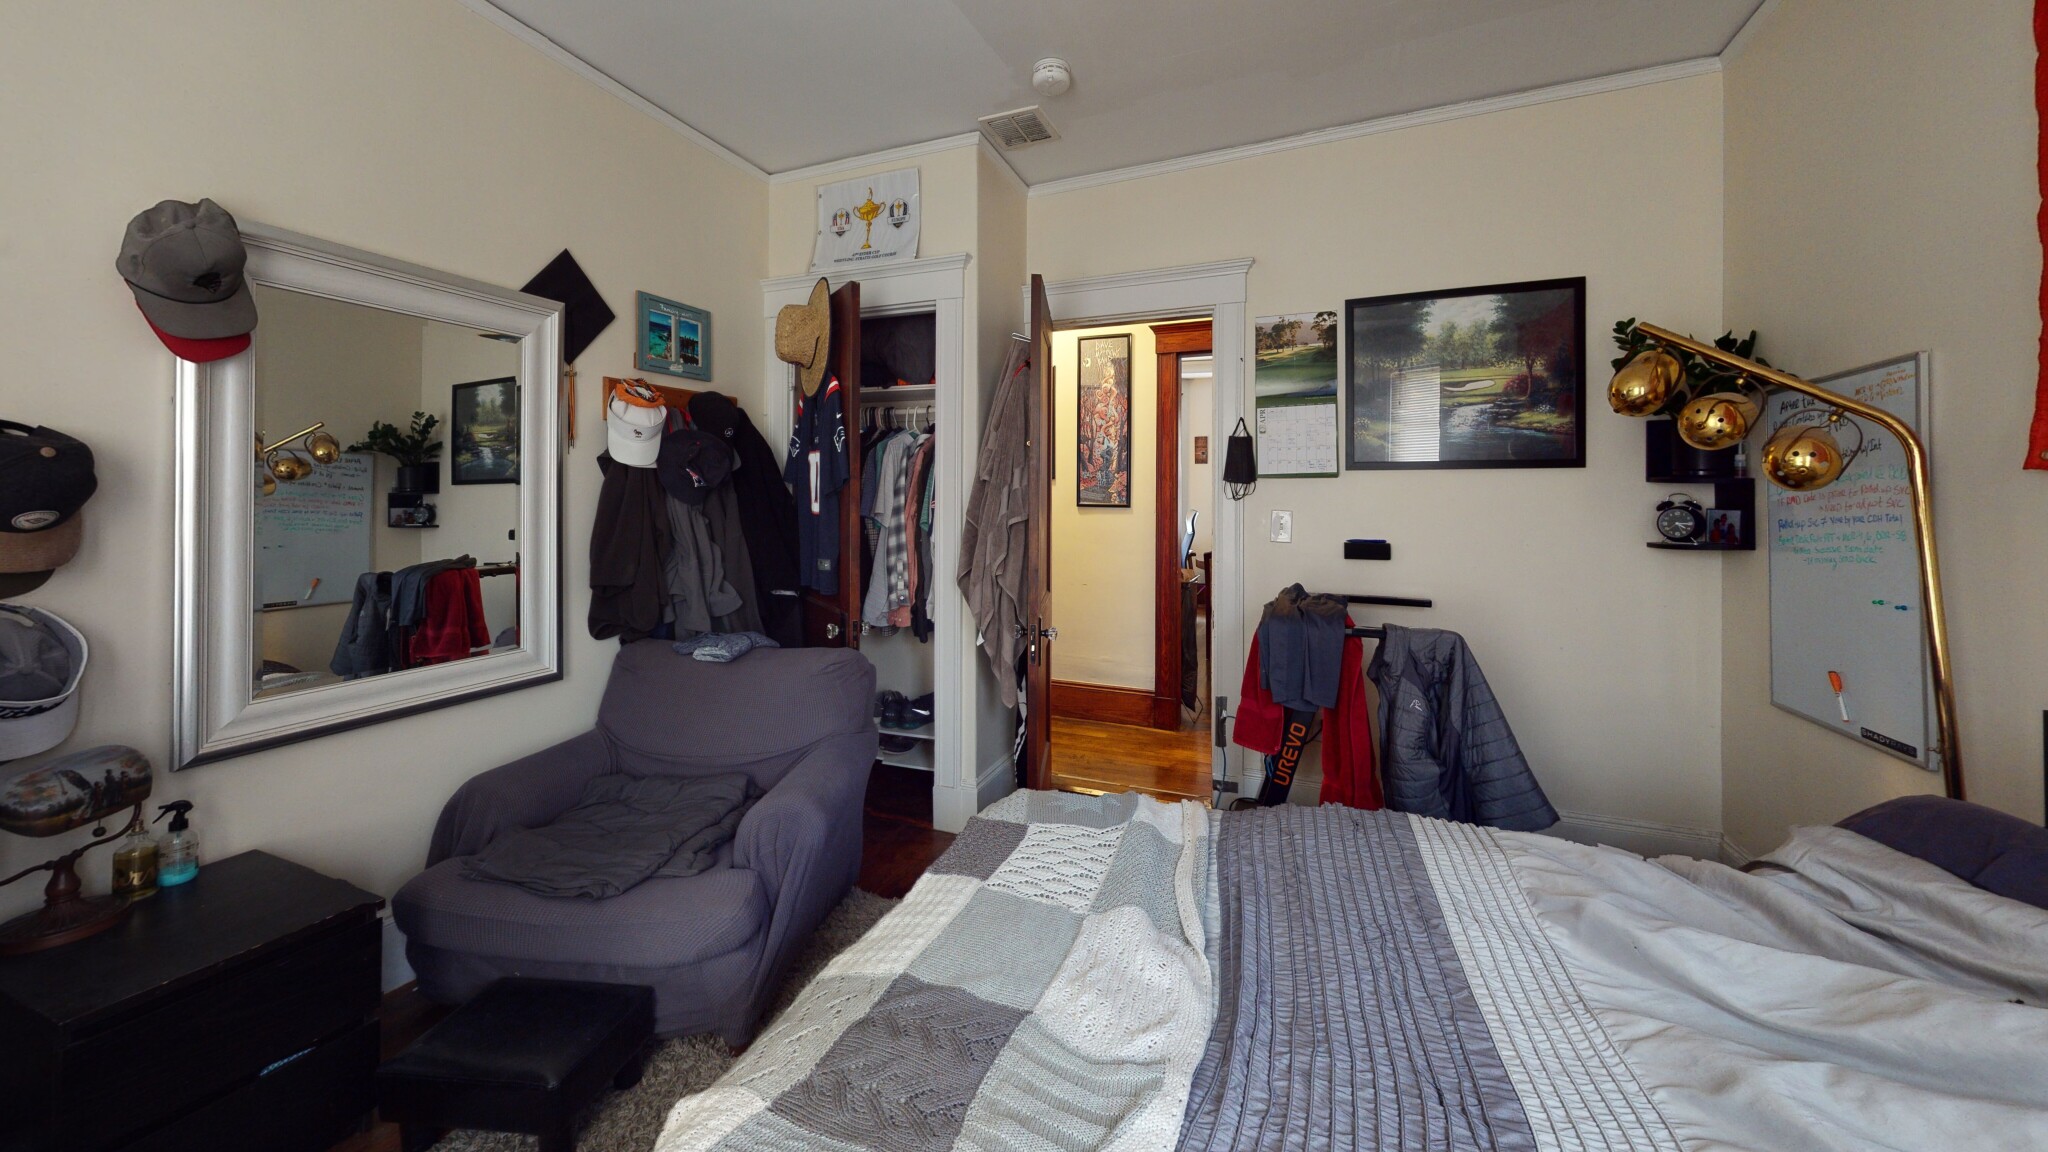 Photos of apartment on Brooksdale Rd.,Boston MA 02135